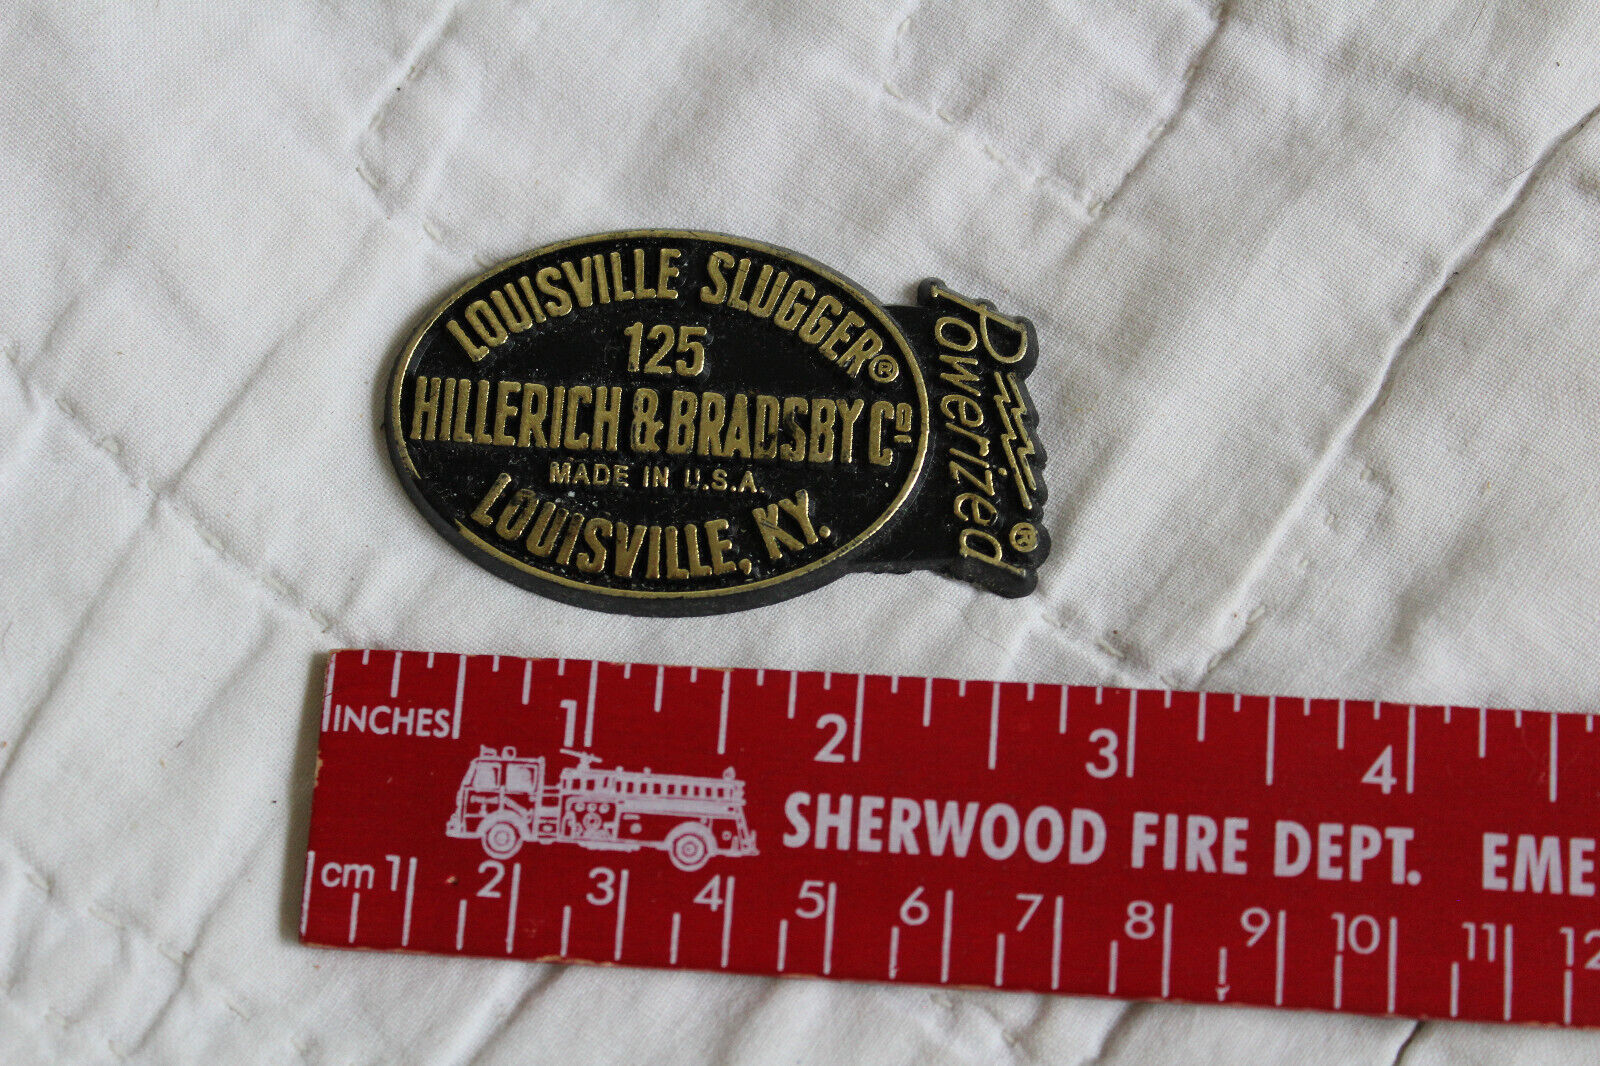 Louisville Slugger 125 Hillerich & Bradsby Co. Souvenir Refrigerator Magnet